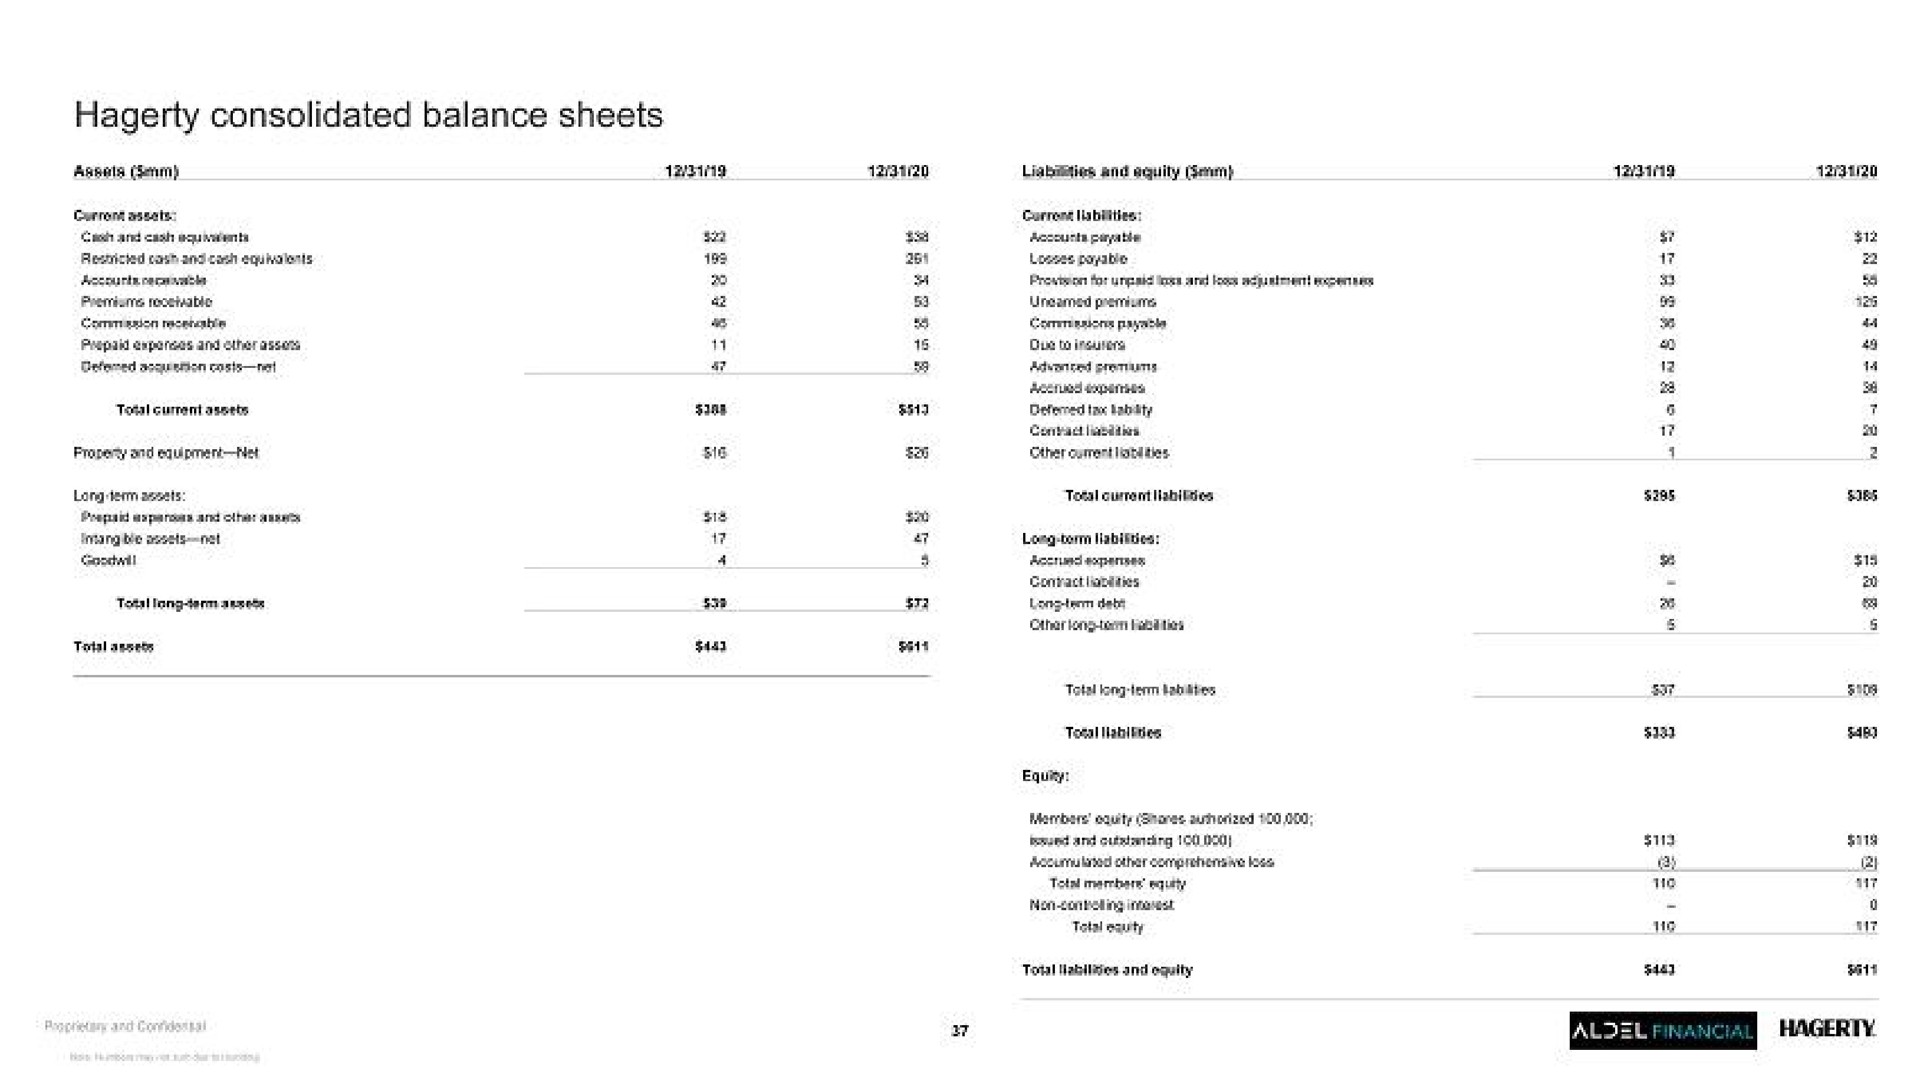 consolidated balance sheets | Hagerty